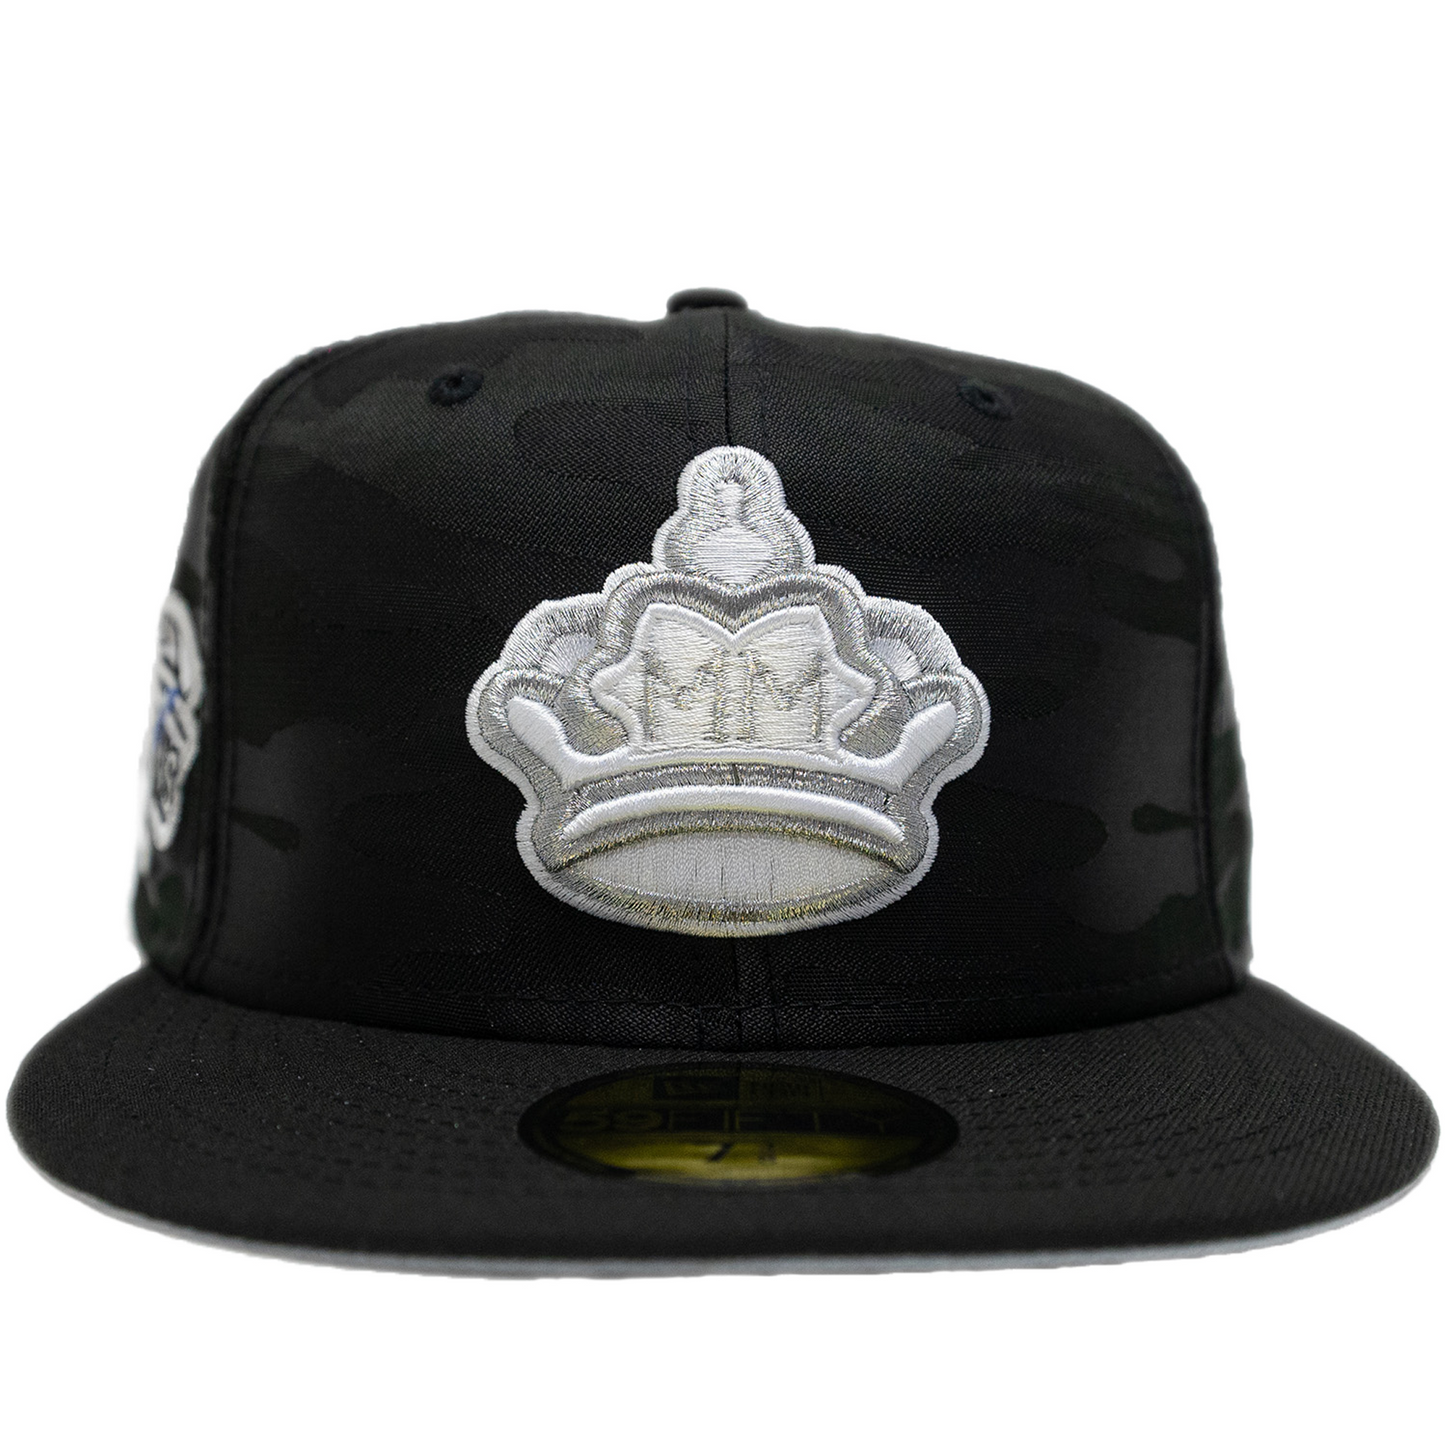 New Era Miami Marlins 59FIFTY Hat - Black/ Camo